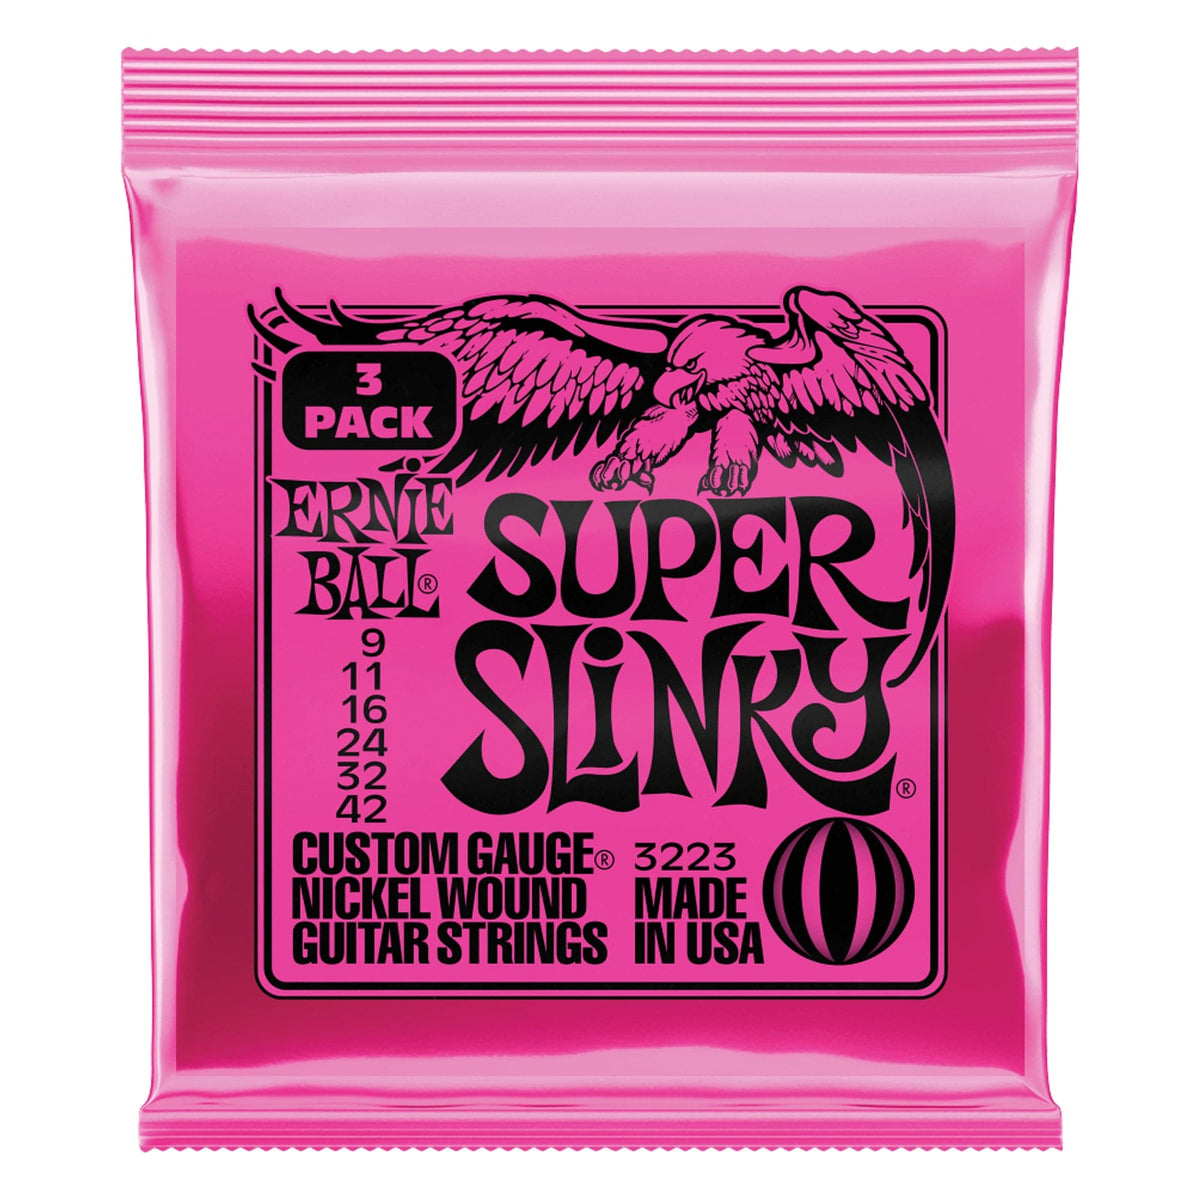 Ernie Ball Super Slinky Electric Guitar Strings 3223 - 09-42 - 3 Pack